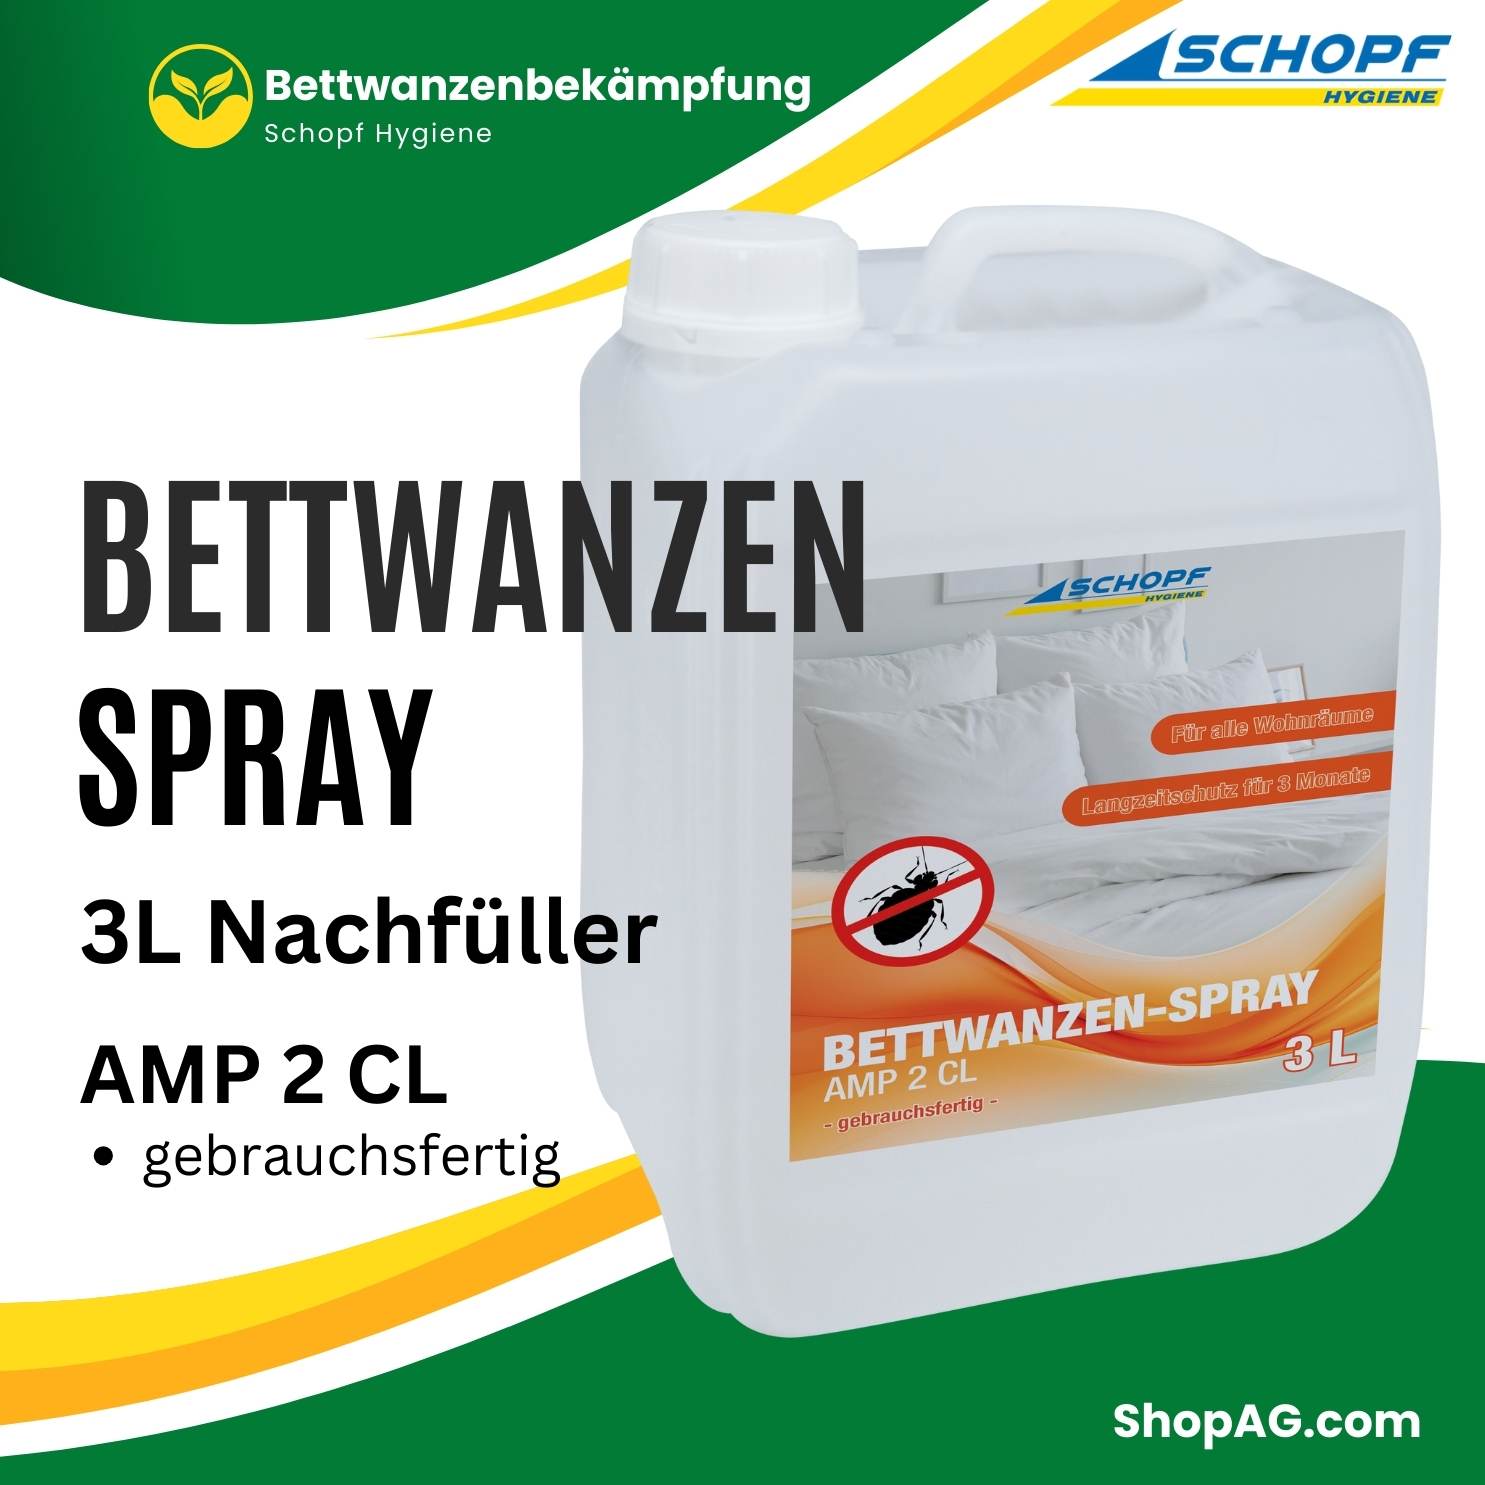 Bettwanzen-Spray 3L Nachfüller AMP 2 CL Insektizid gegen Bettwanzen Schopf Hygiene 